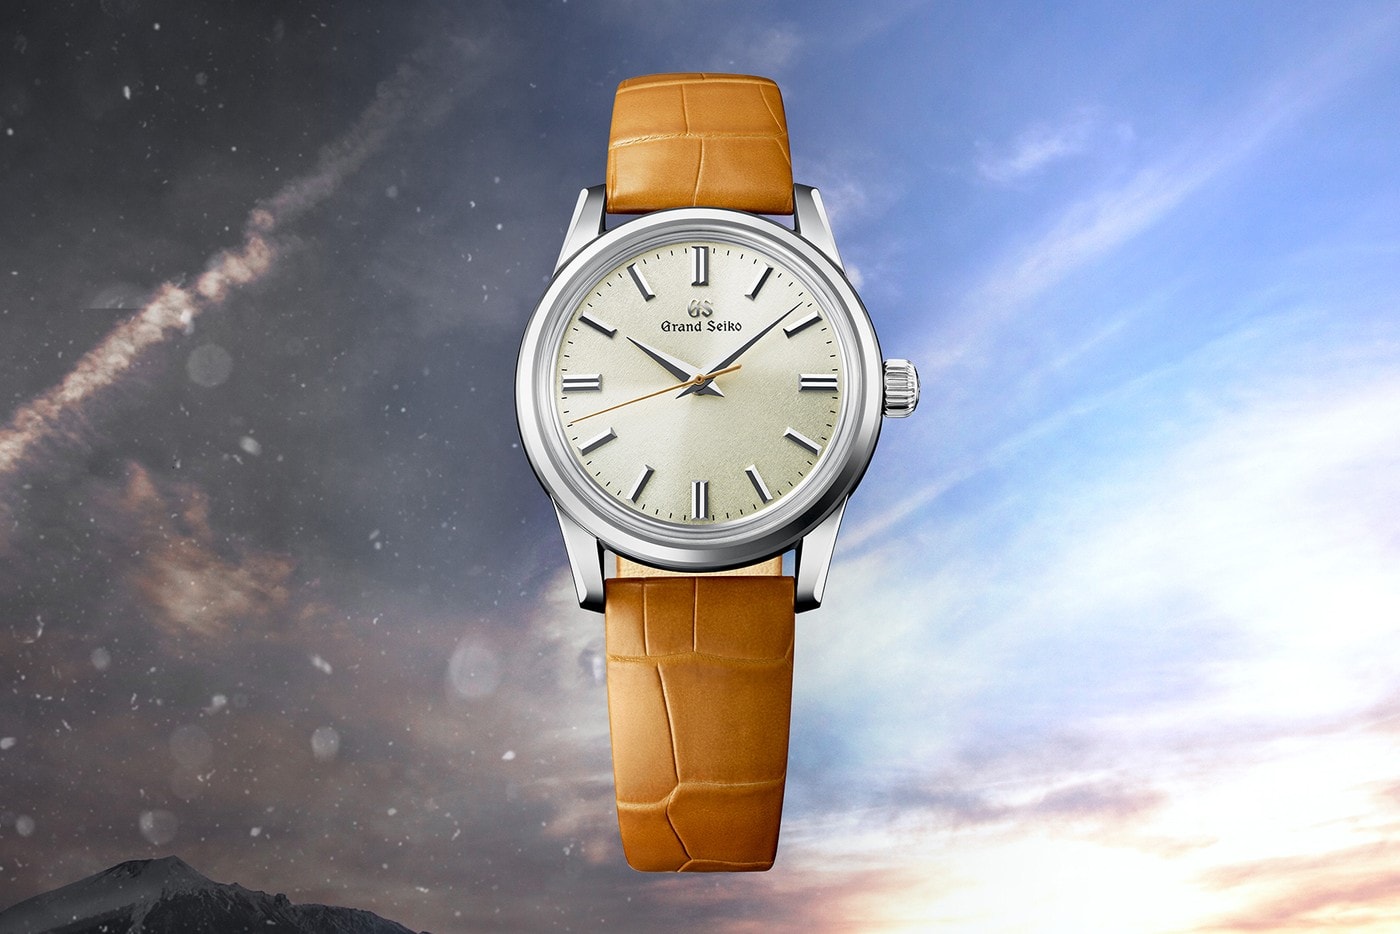 Grand Seiko 推出「晚冬」與「暮秋」兩枚全新季節主題錶款